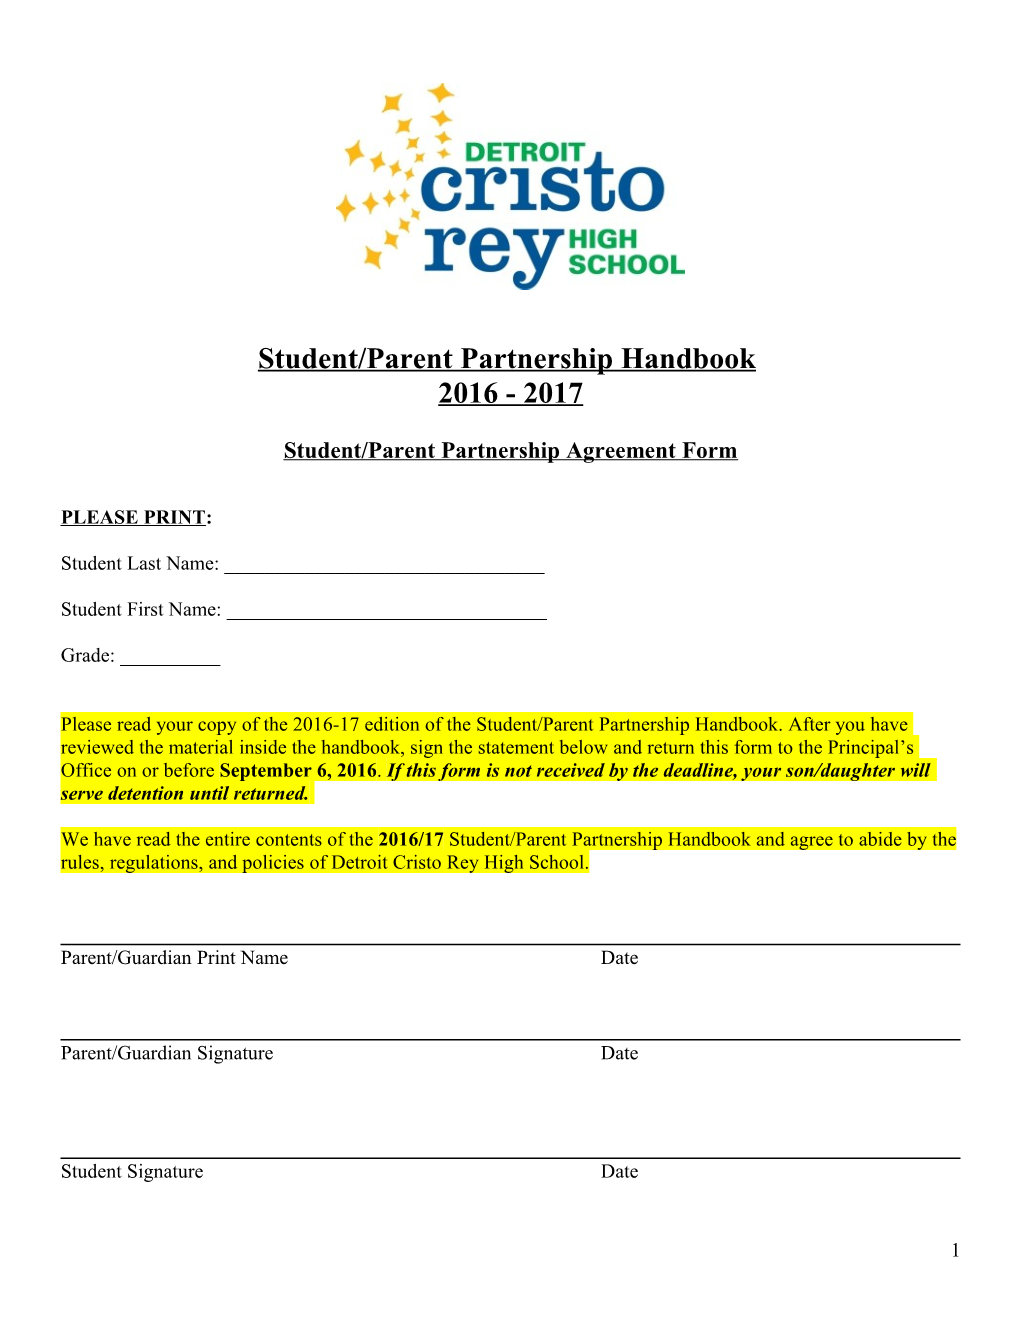 Student/Parent Partnership Agreement Form